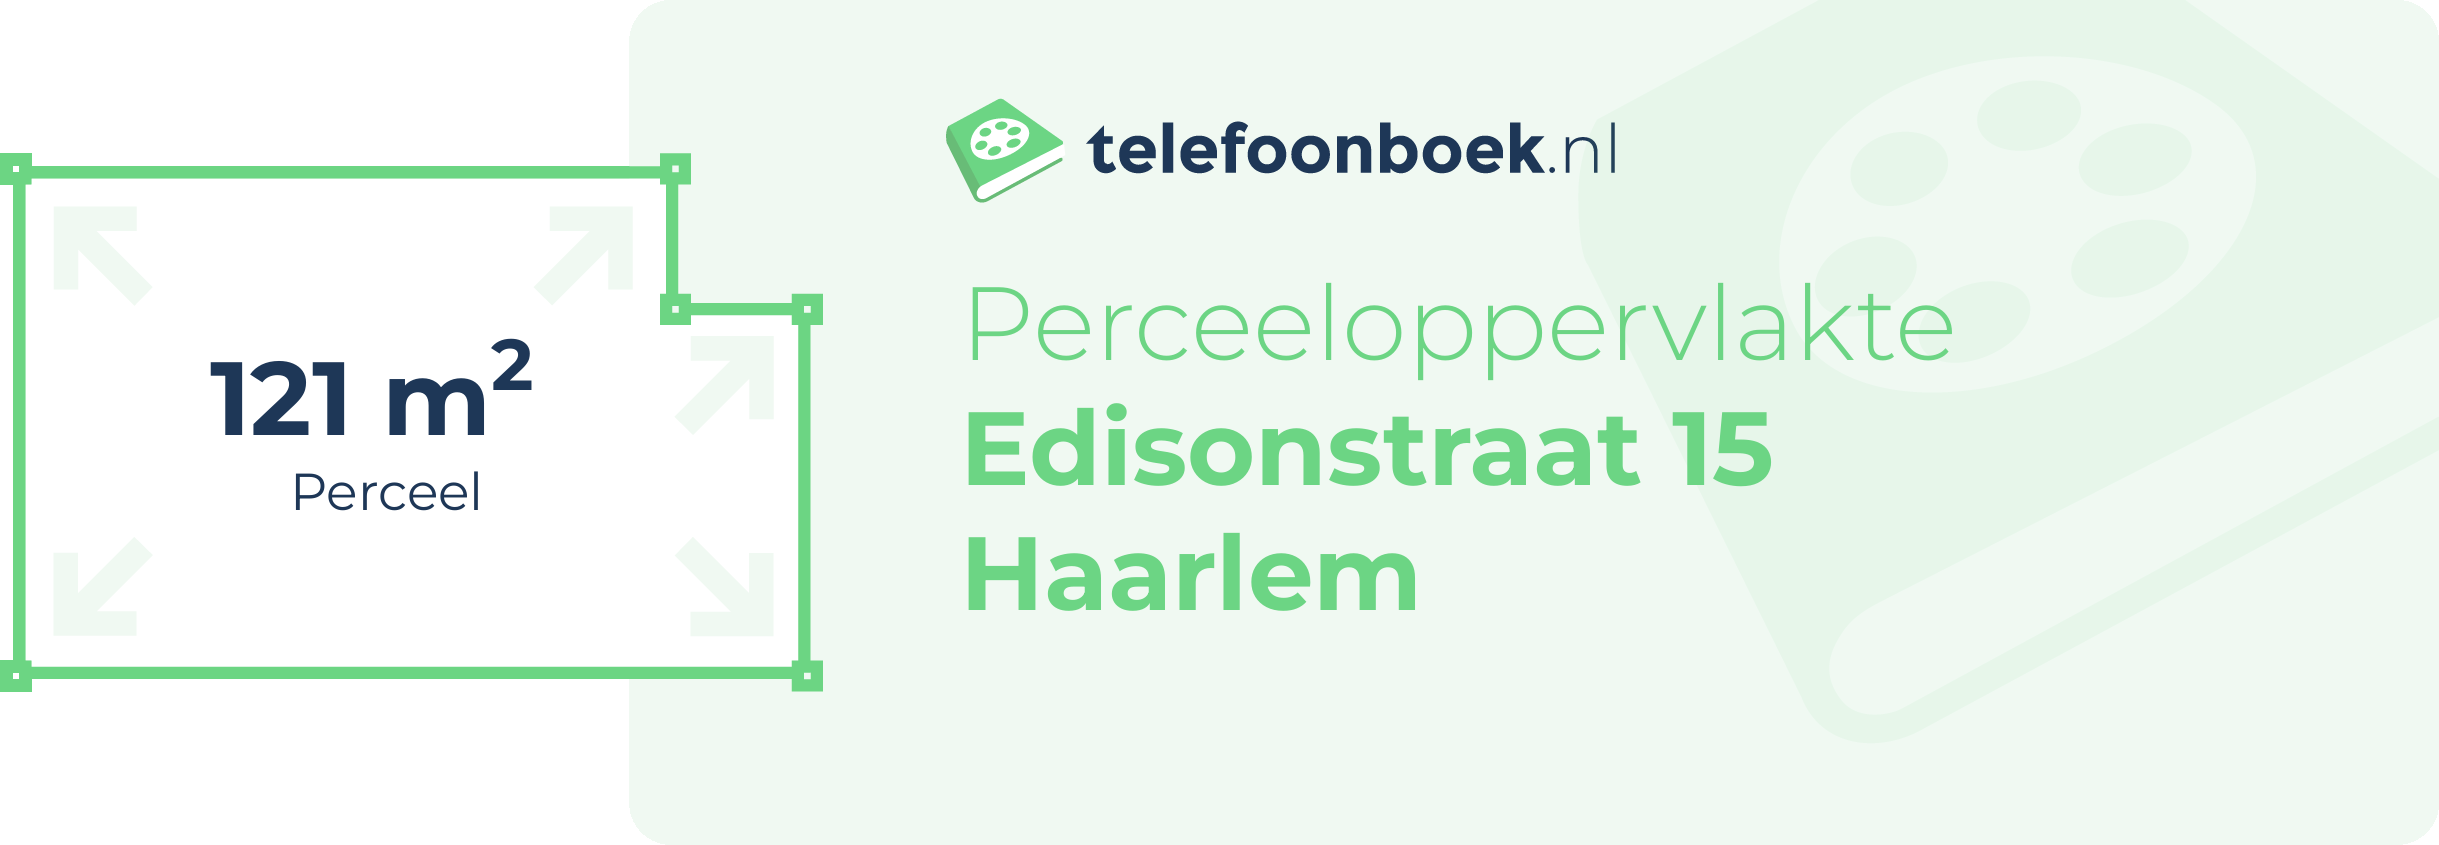 Perceeloppervlakte Edisonstraat 15 Haarlem